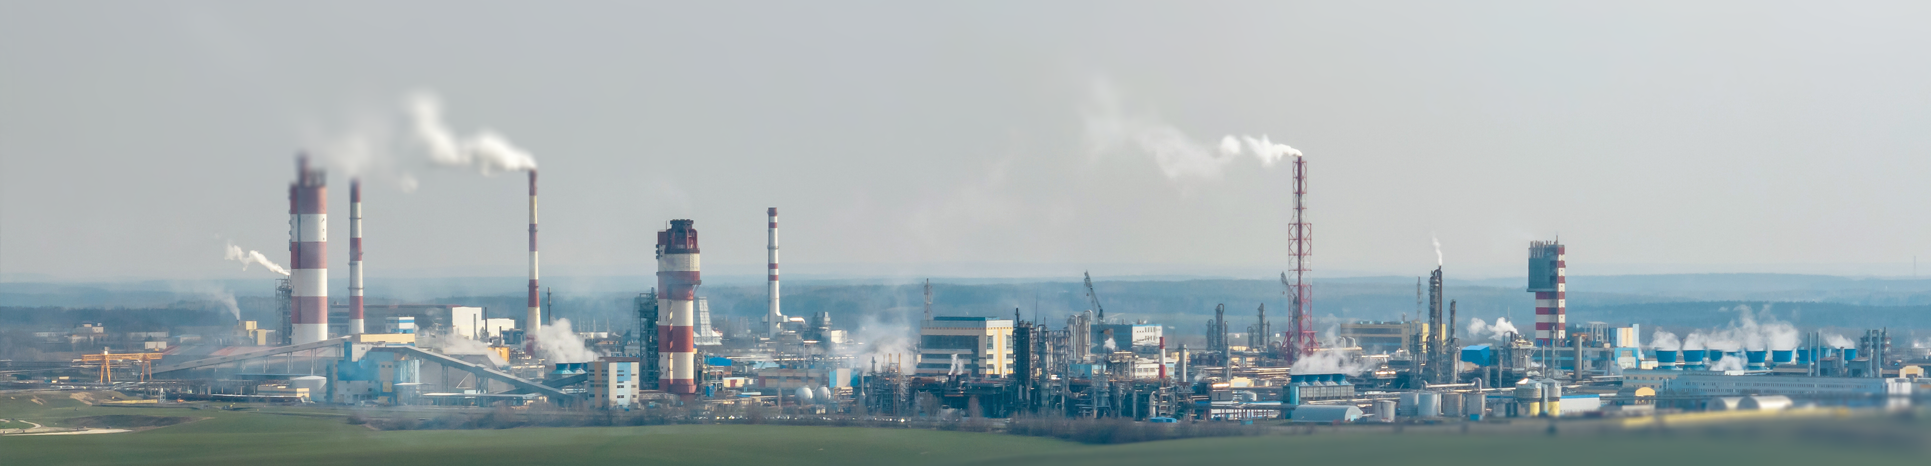 Panoramic Oil Refinery